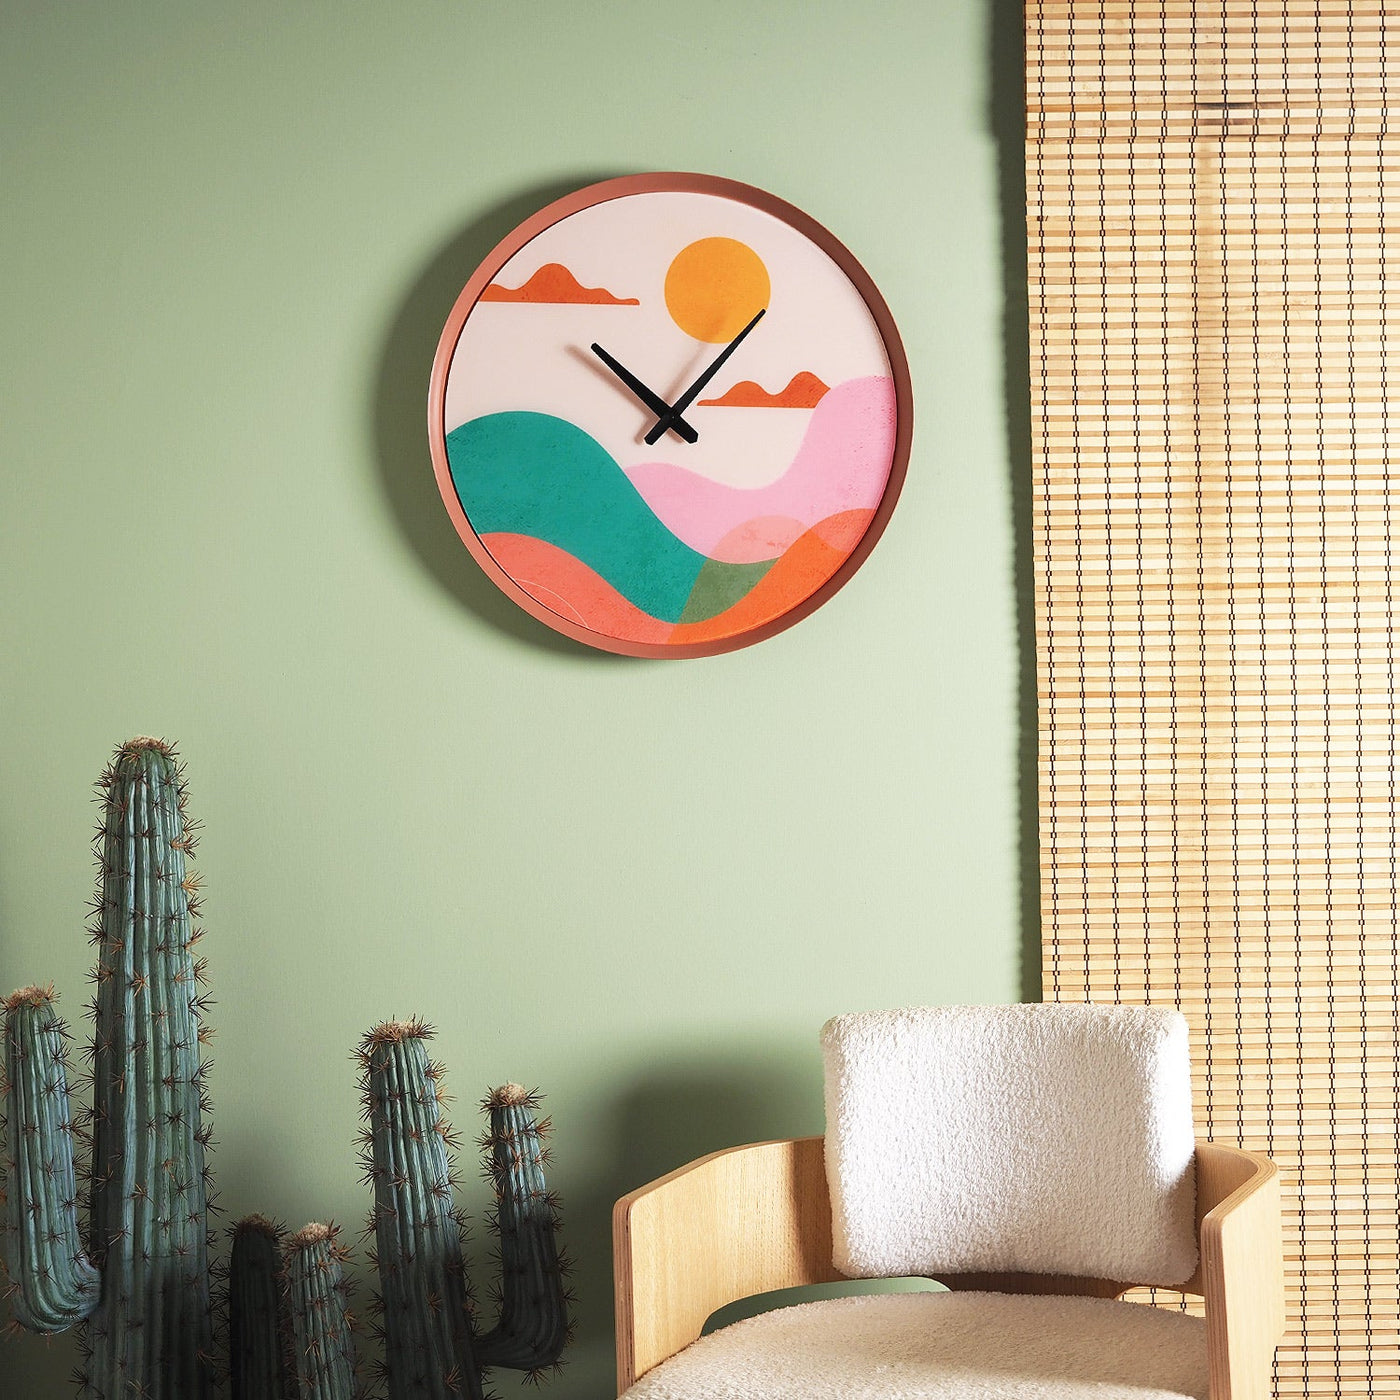 Colorful Abstract Metal Wall Clock - Wall Clock Decorations